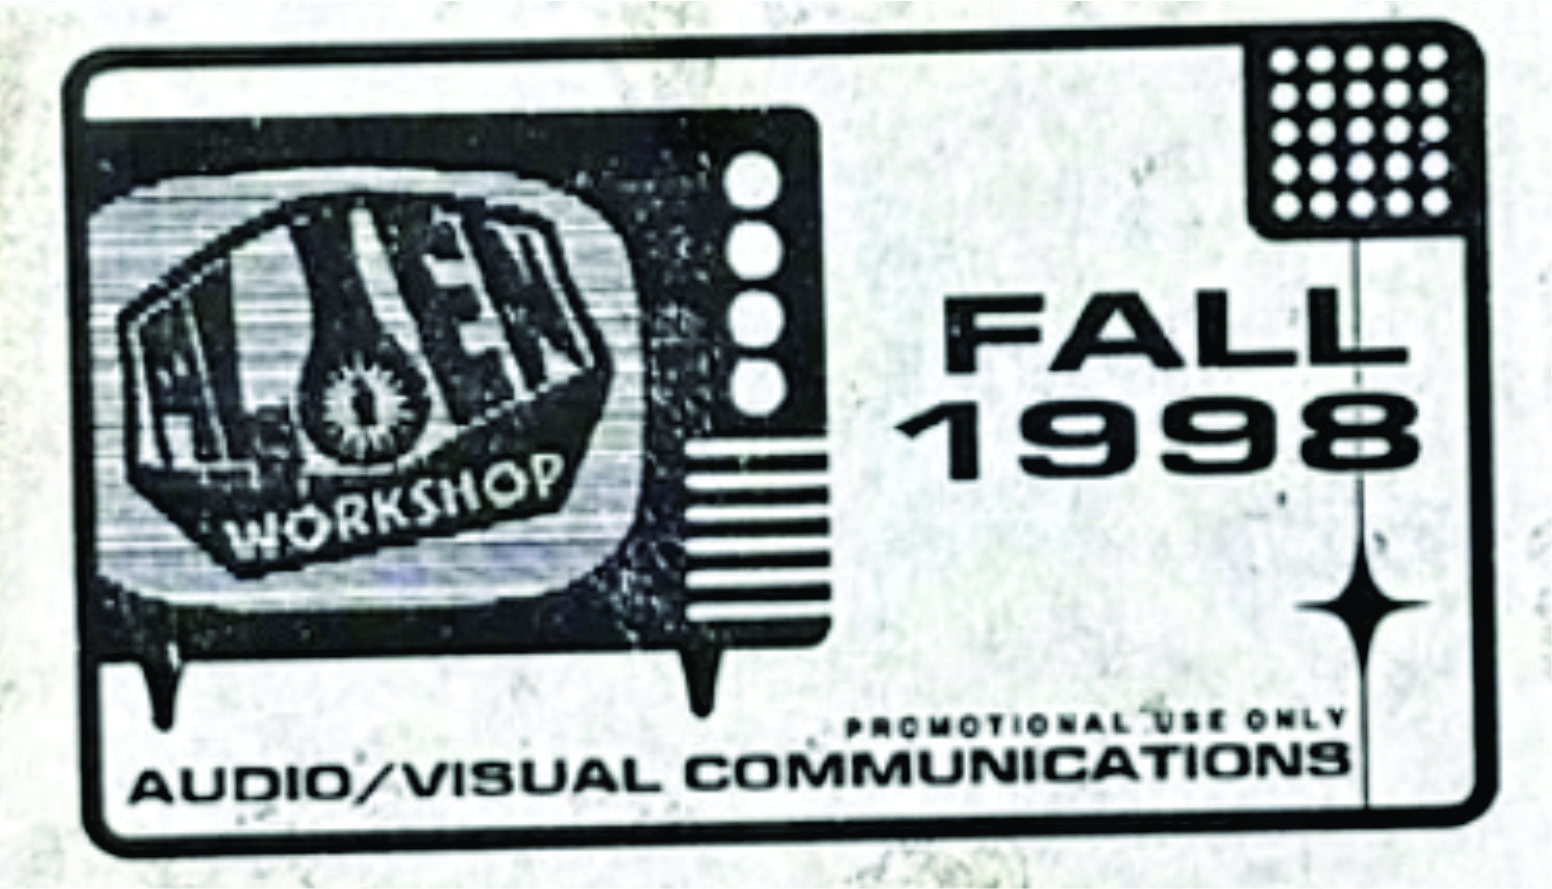 Alien Workshop - Fall 1998 cover